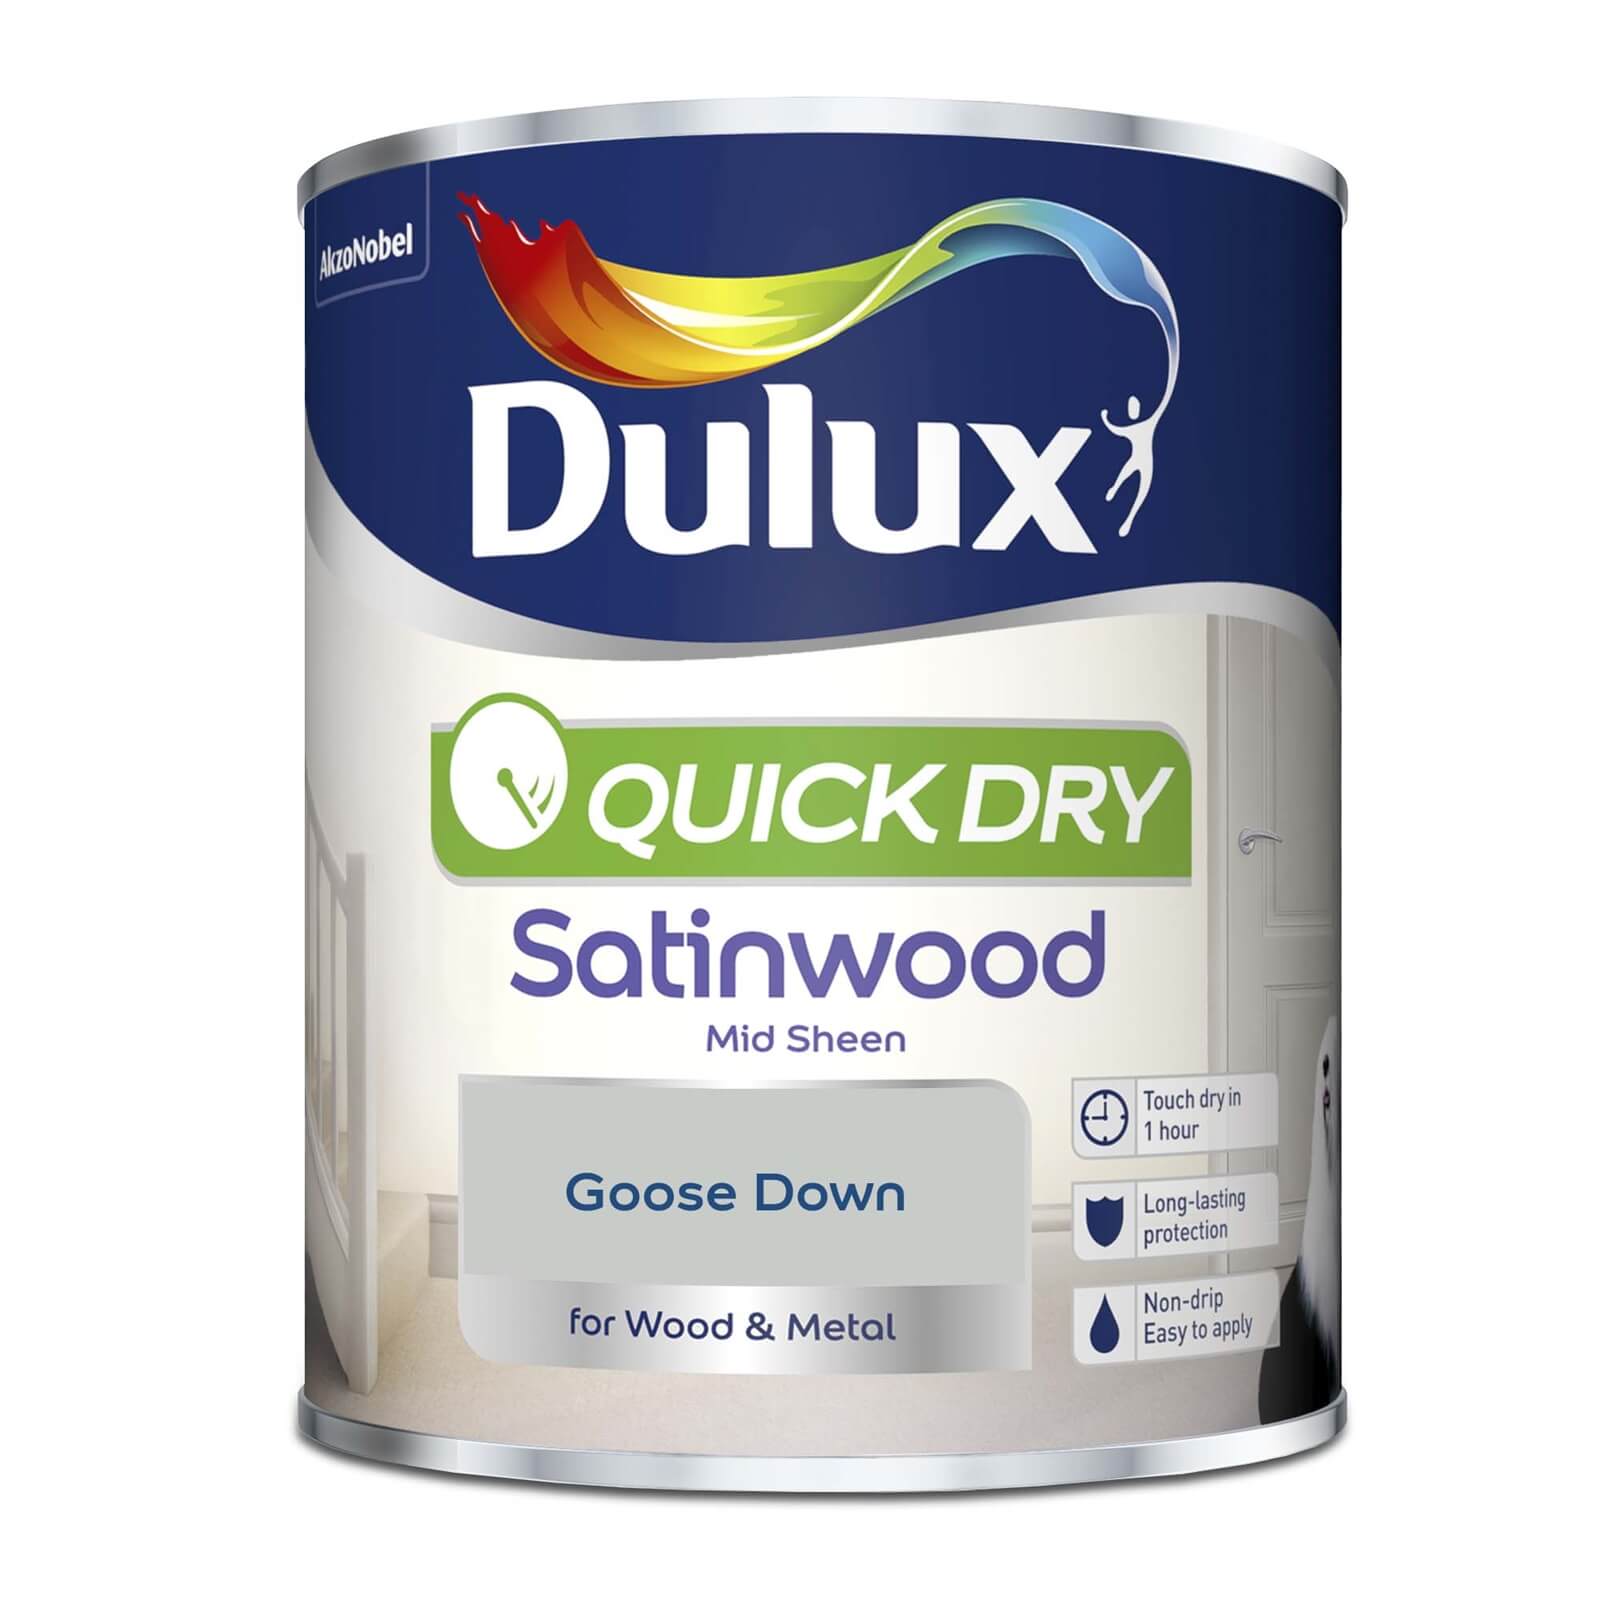 Dulux Quick Dry Satinwood Paint Goose Down - 750ml